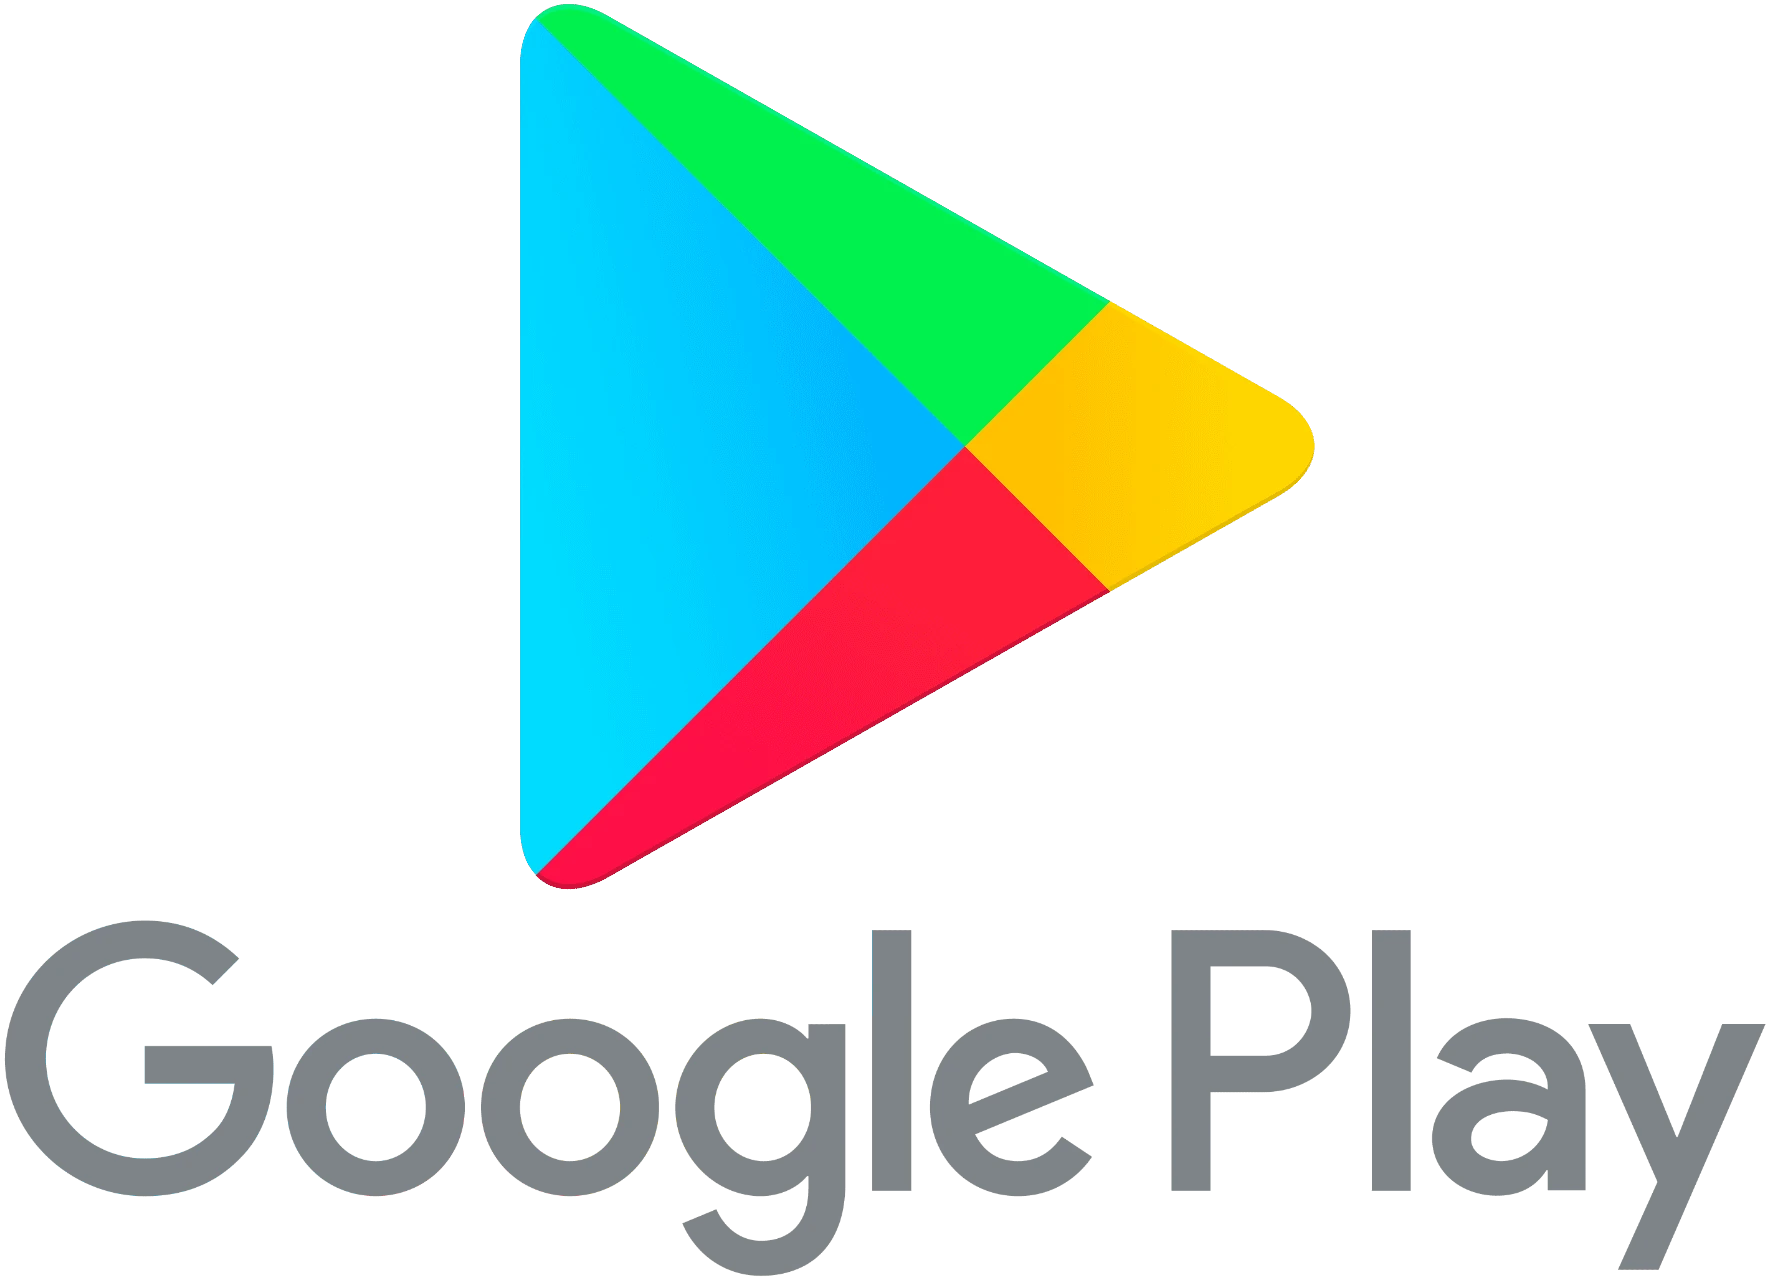 Logo di Google Play Store